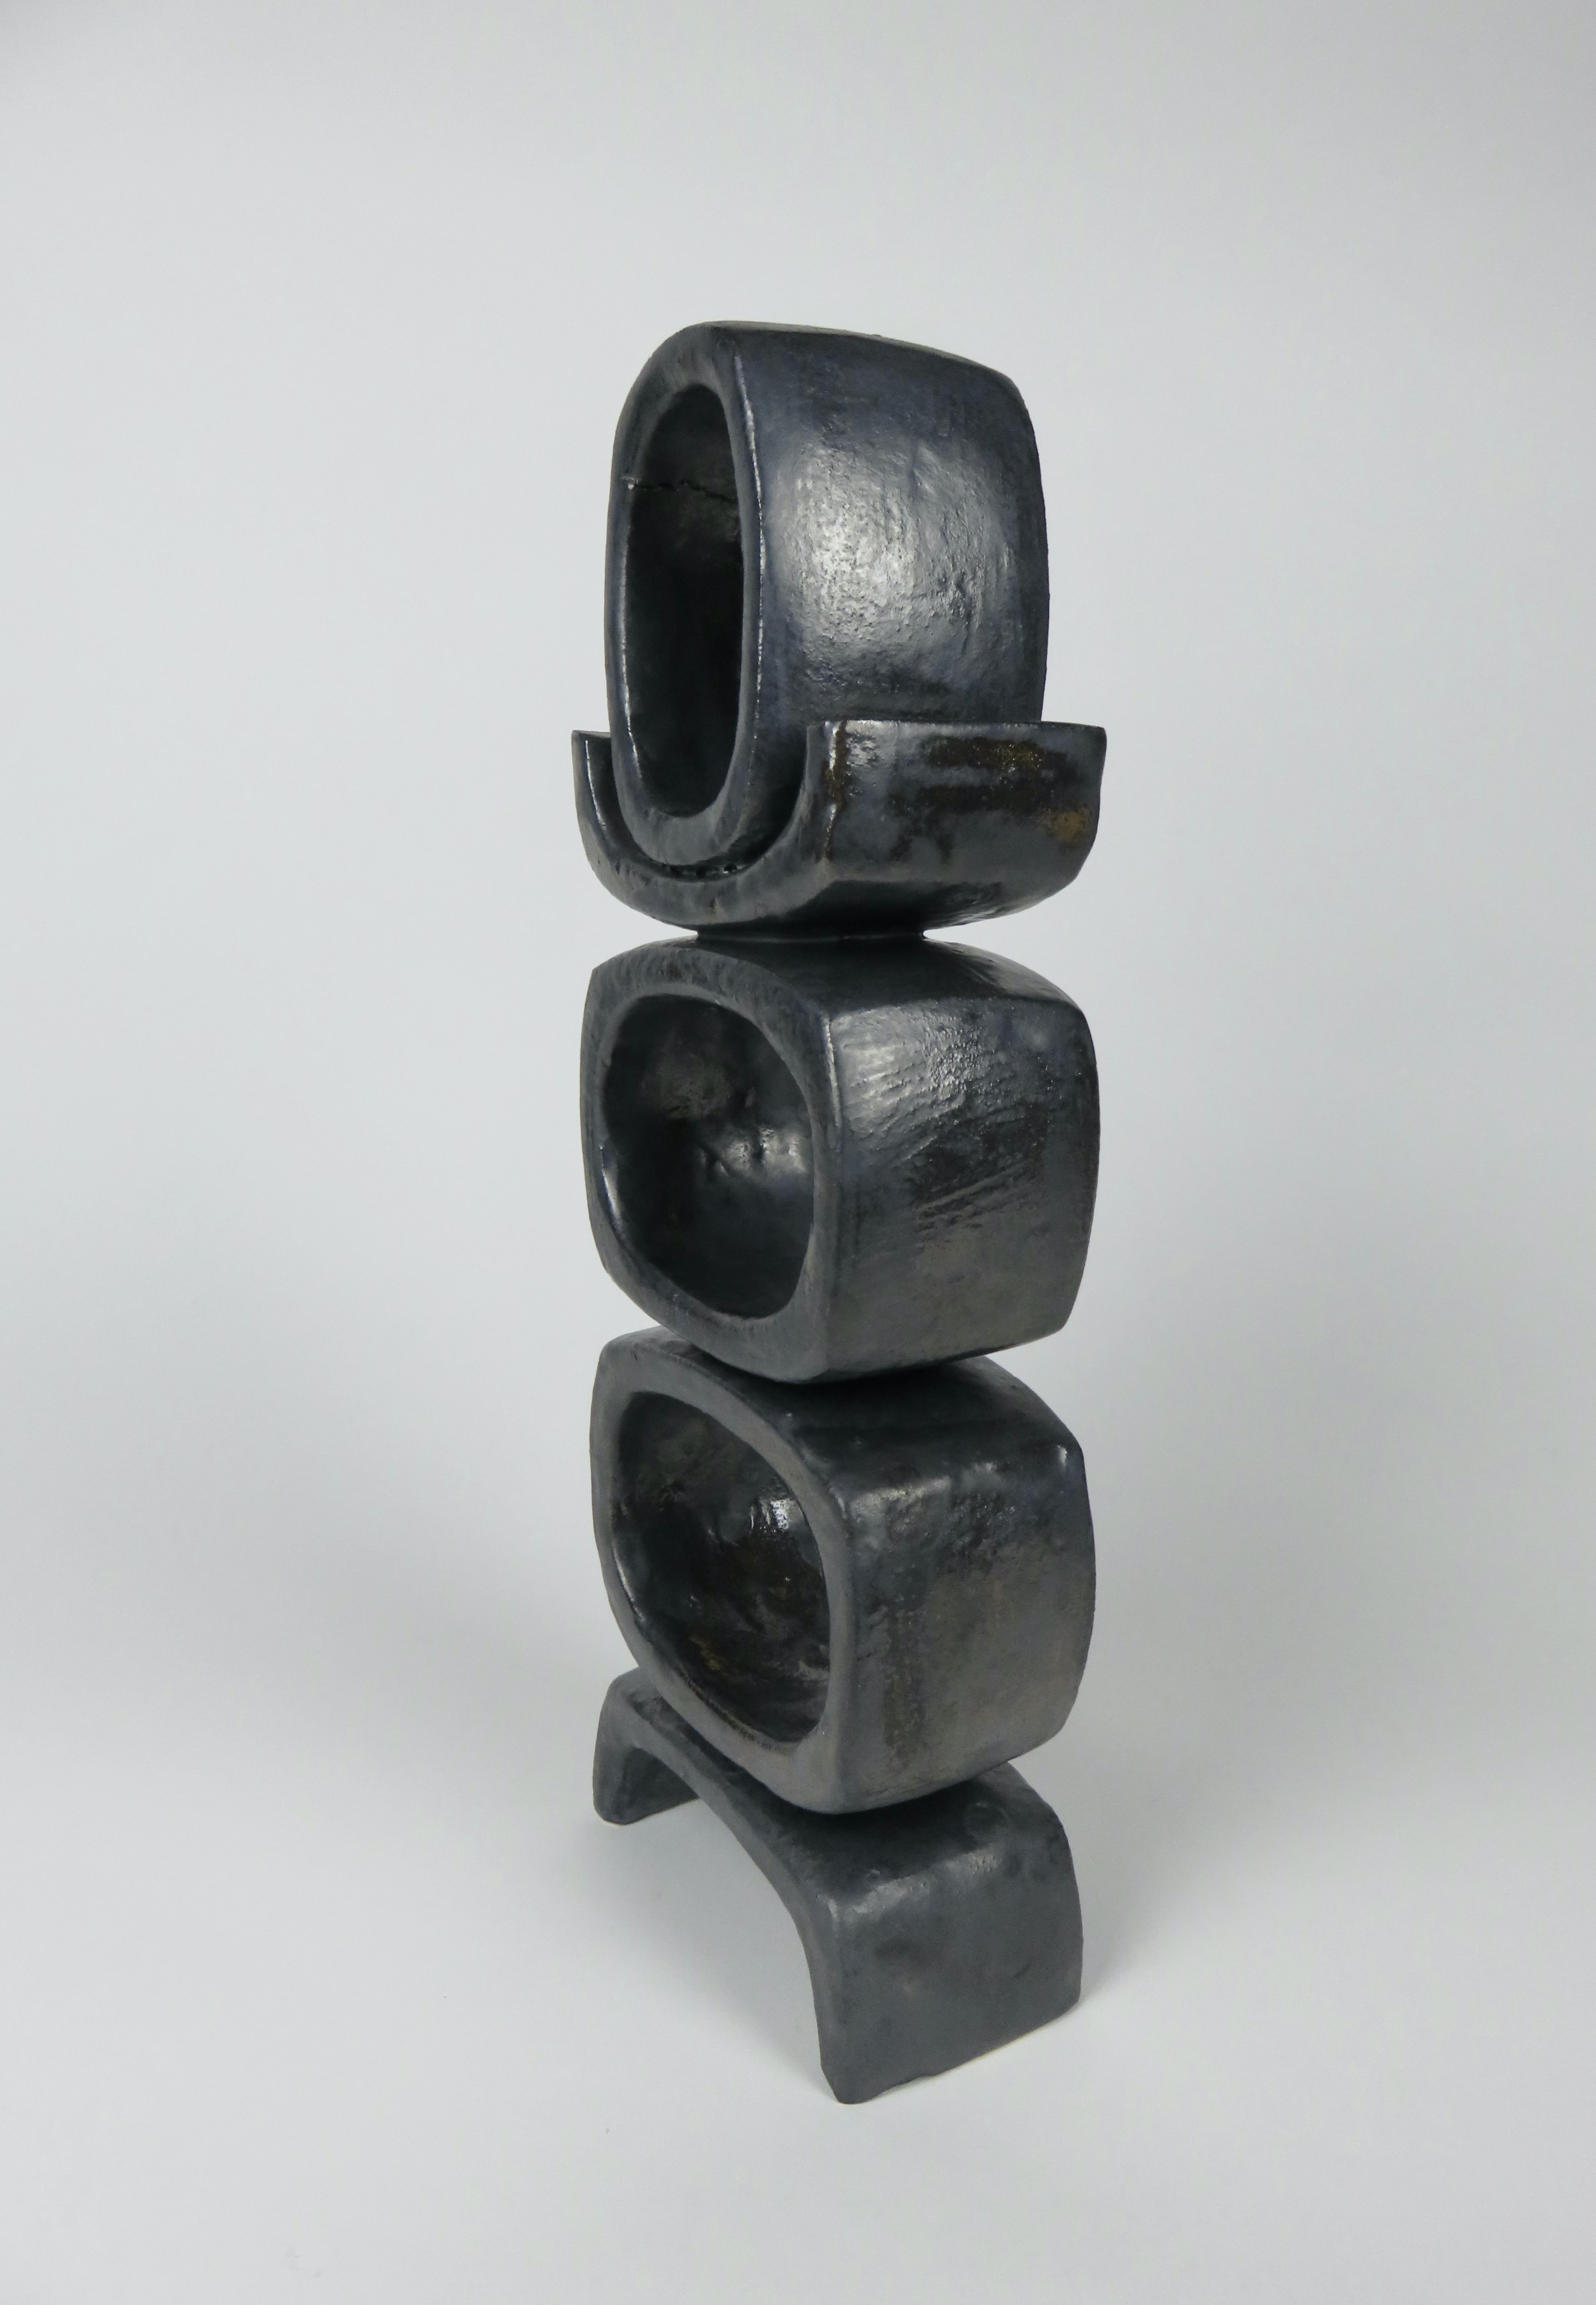 Organic Modern 3 Rectangular Ovals on Short Angled Legs, Metallic Black-Glaze Clay Sculpture #2 For Sale